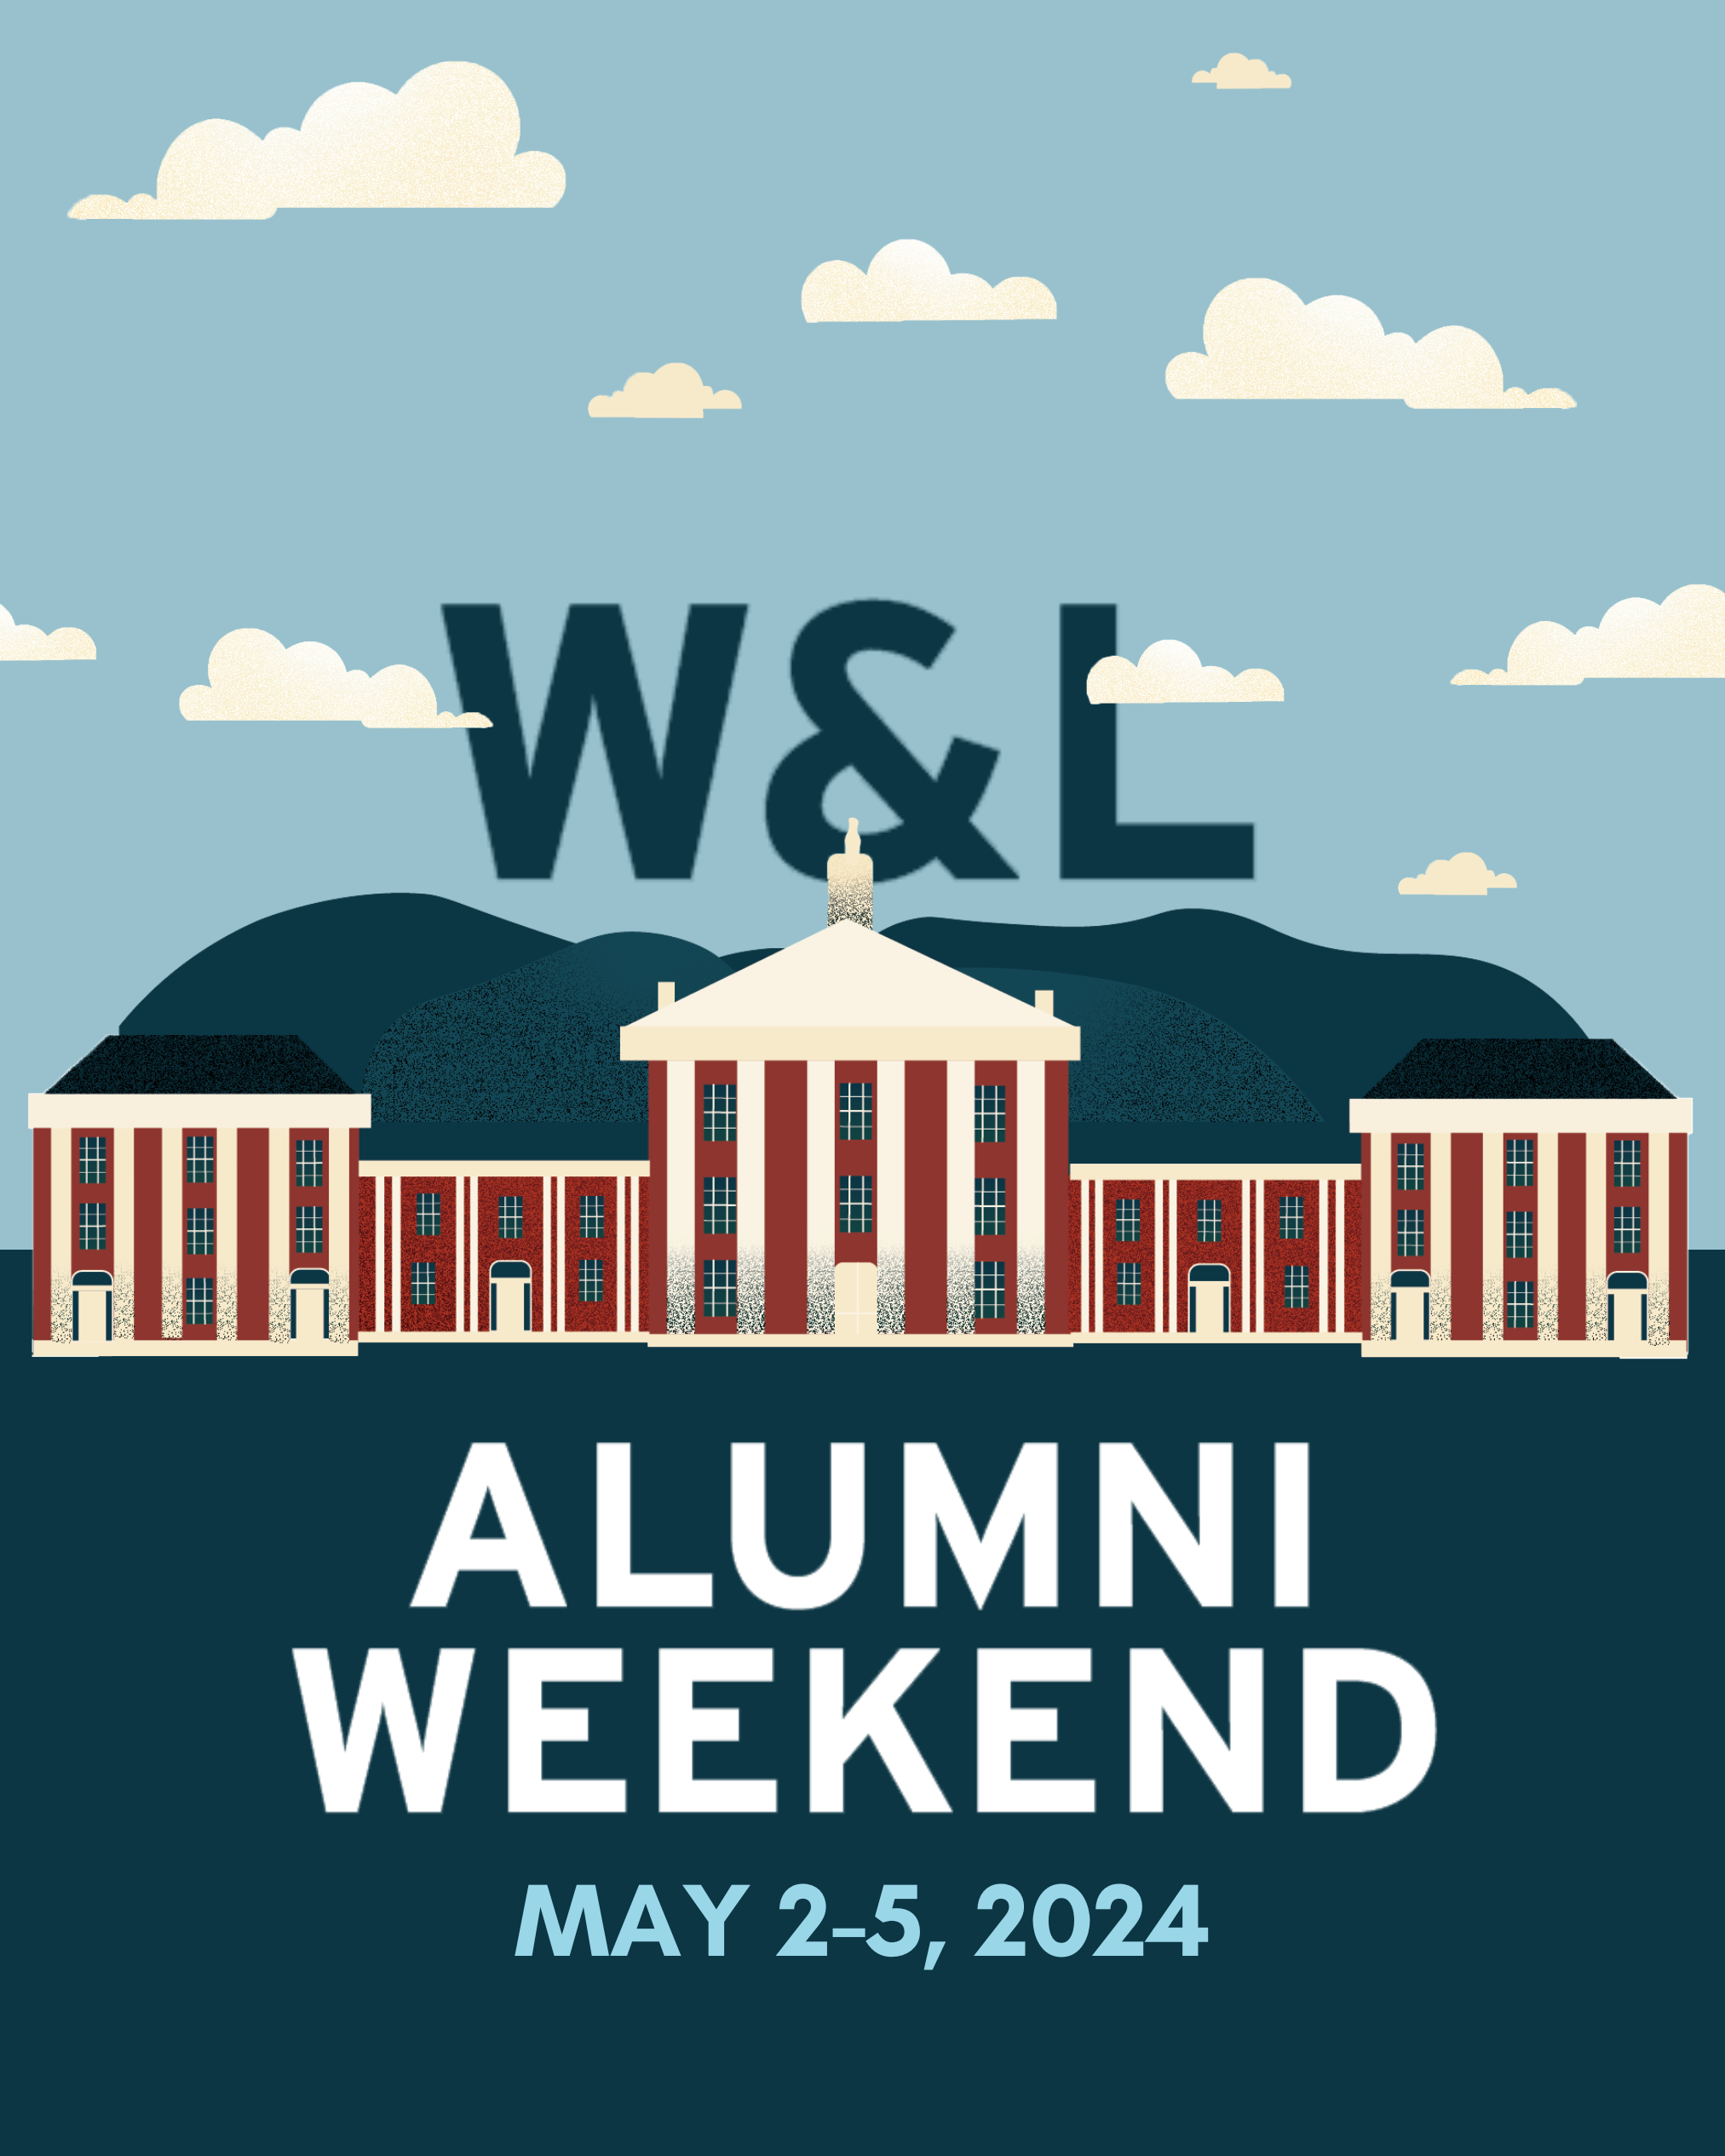 Alumni Weekend May 2-5, 2024 graphic